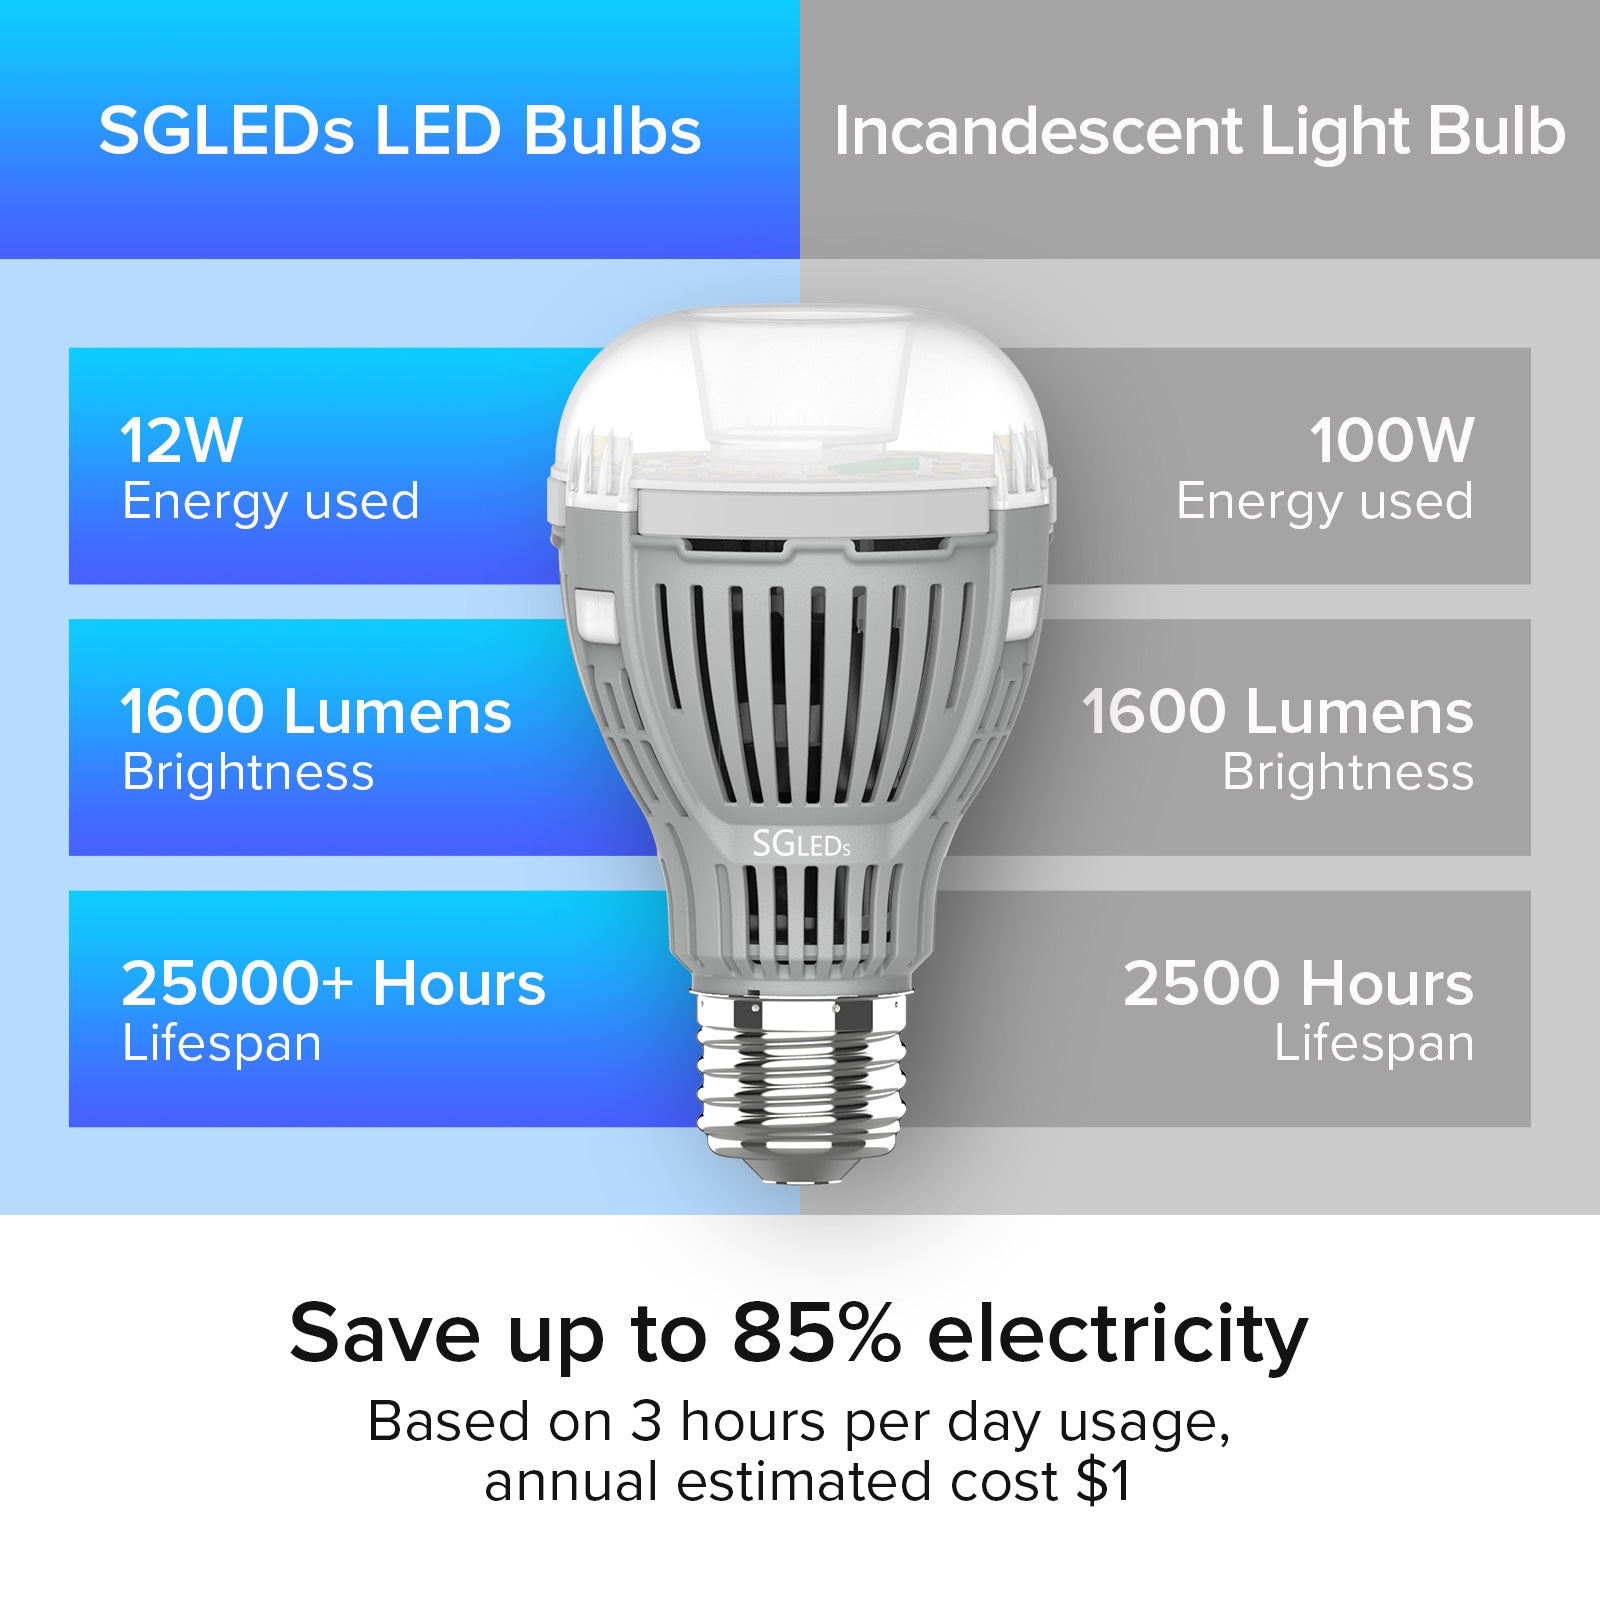 SG A19 12W led light bulb, 12W energy used, 1600 lumens, 25000+ hours lifespan